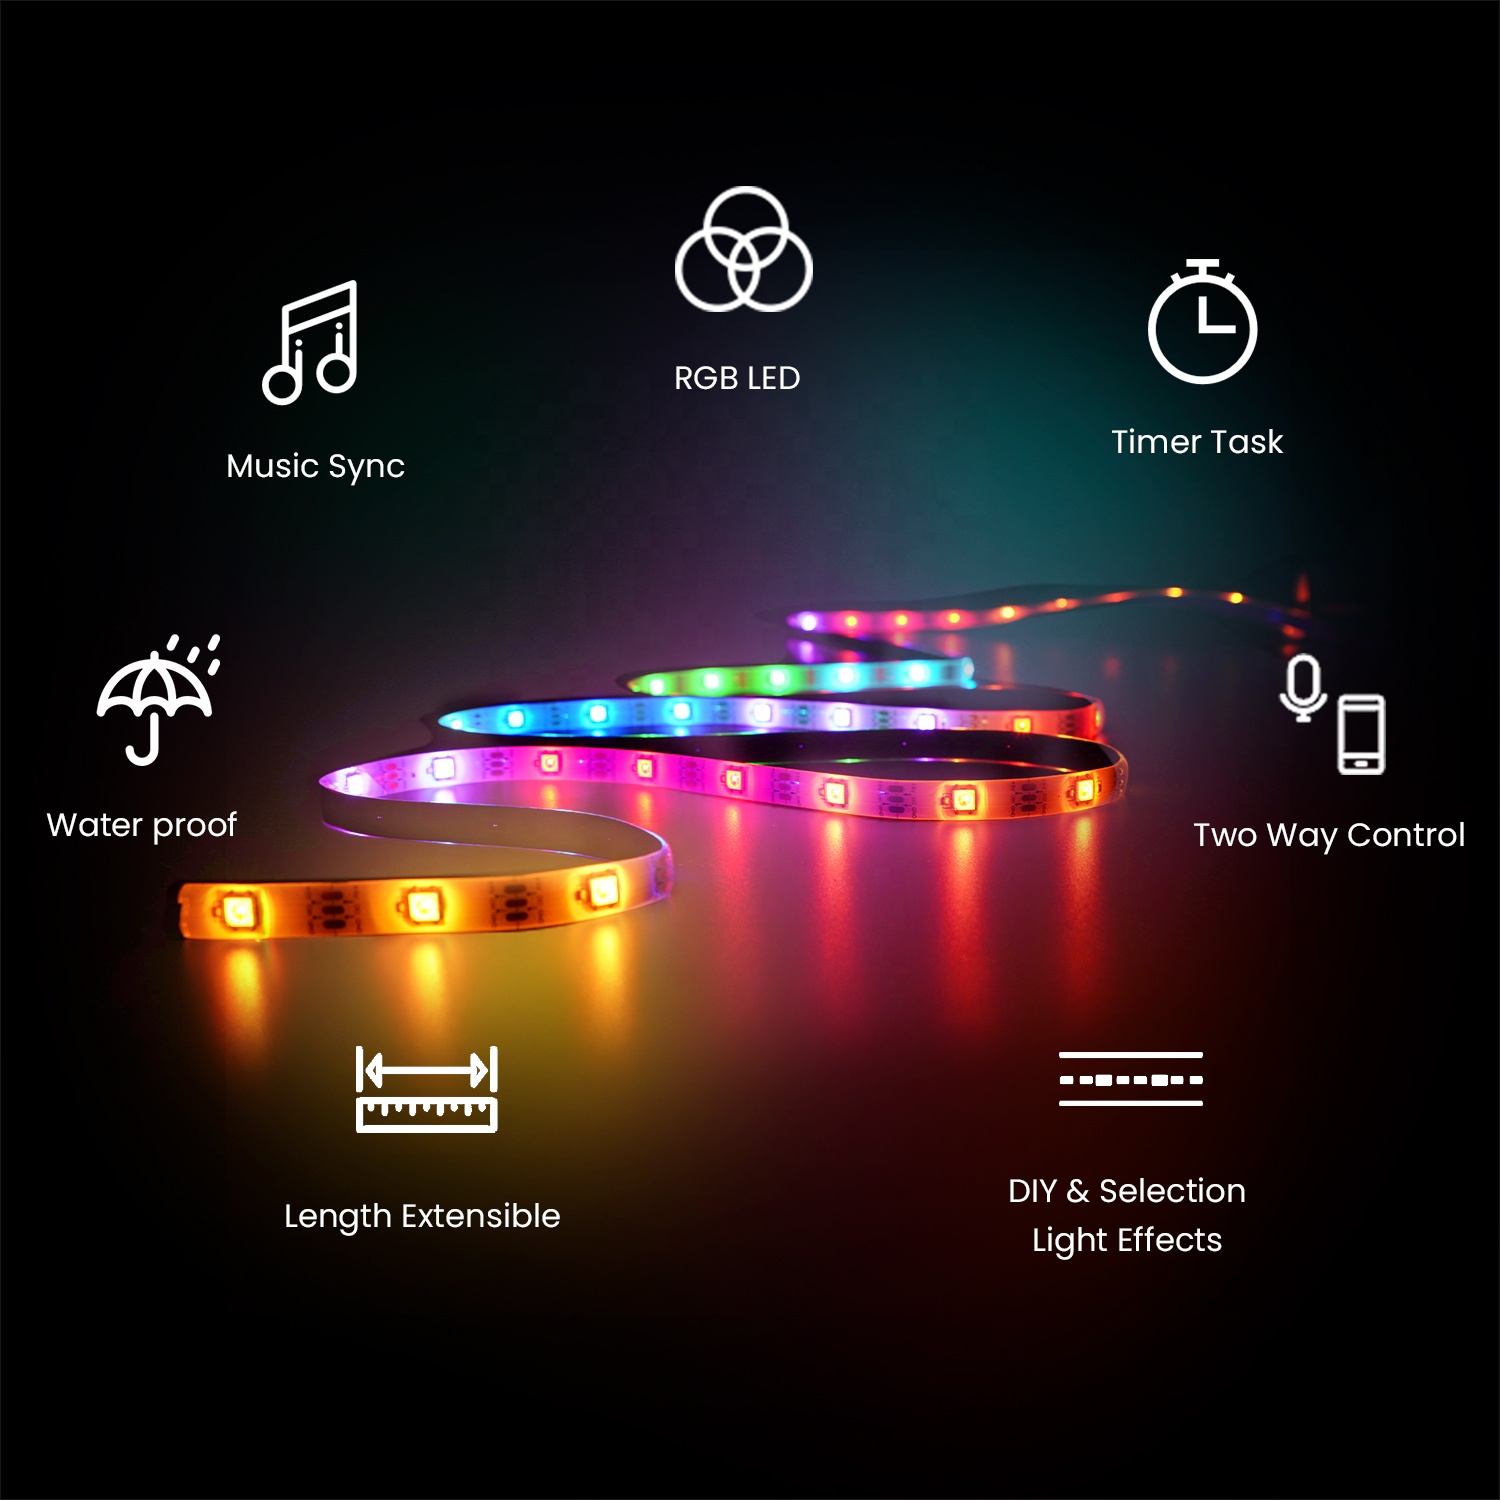 2M LifeSmart Smart Remote Control LED Strip Lights Color Change Tape Light  Siri Homekit App Voice Control 